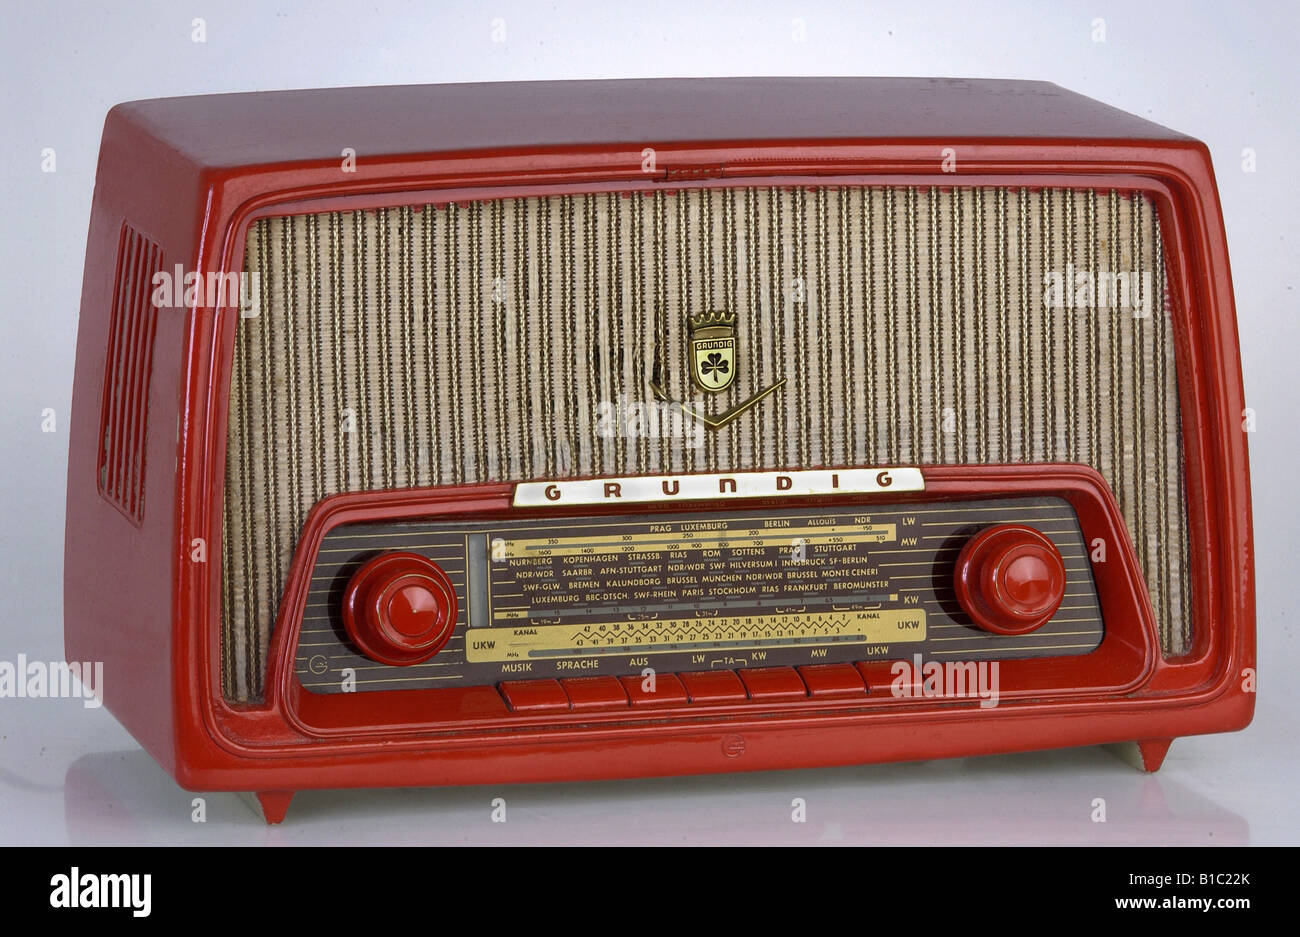 broadcast, radio, radio set, models, Grundig 97, Germany, 1957, technic, technics, historic, historical, plastic case, red, scale, tuner, Made in Germany, 1950s, 20th century, Stock Photo